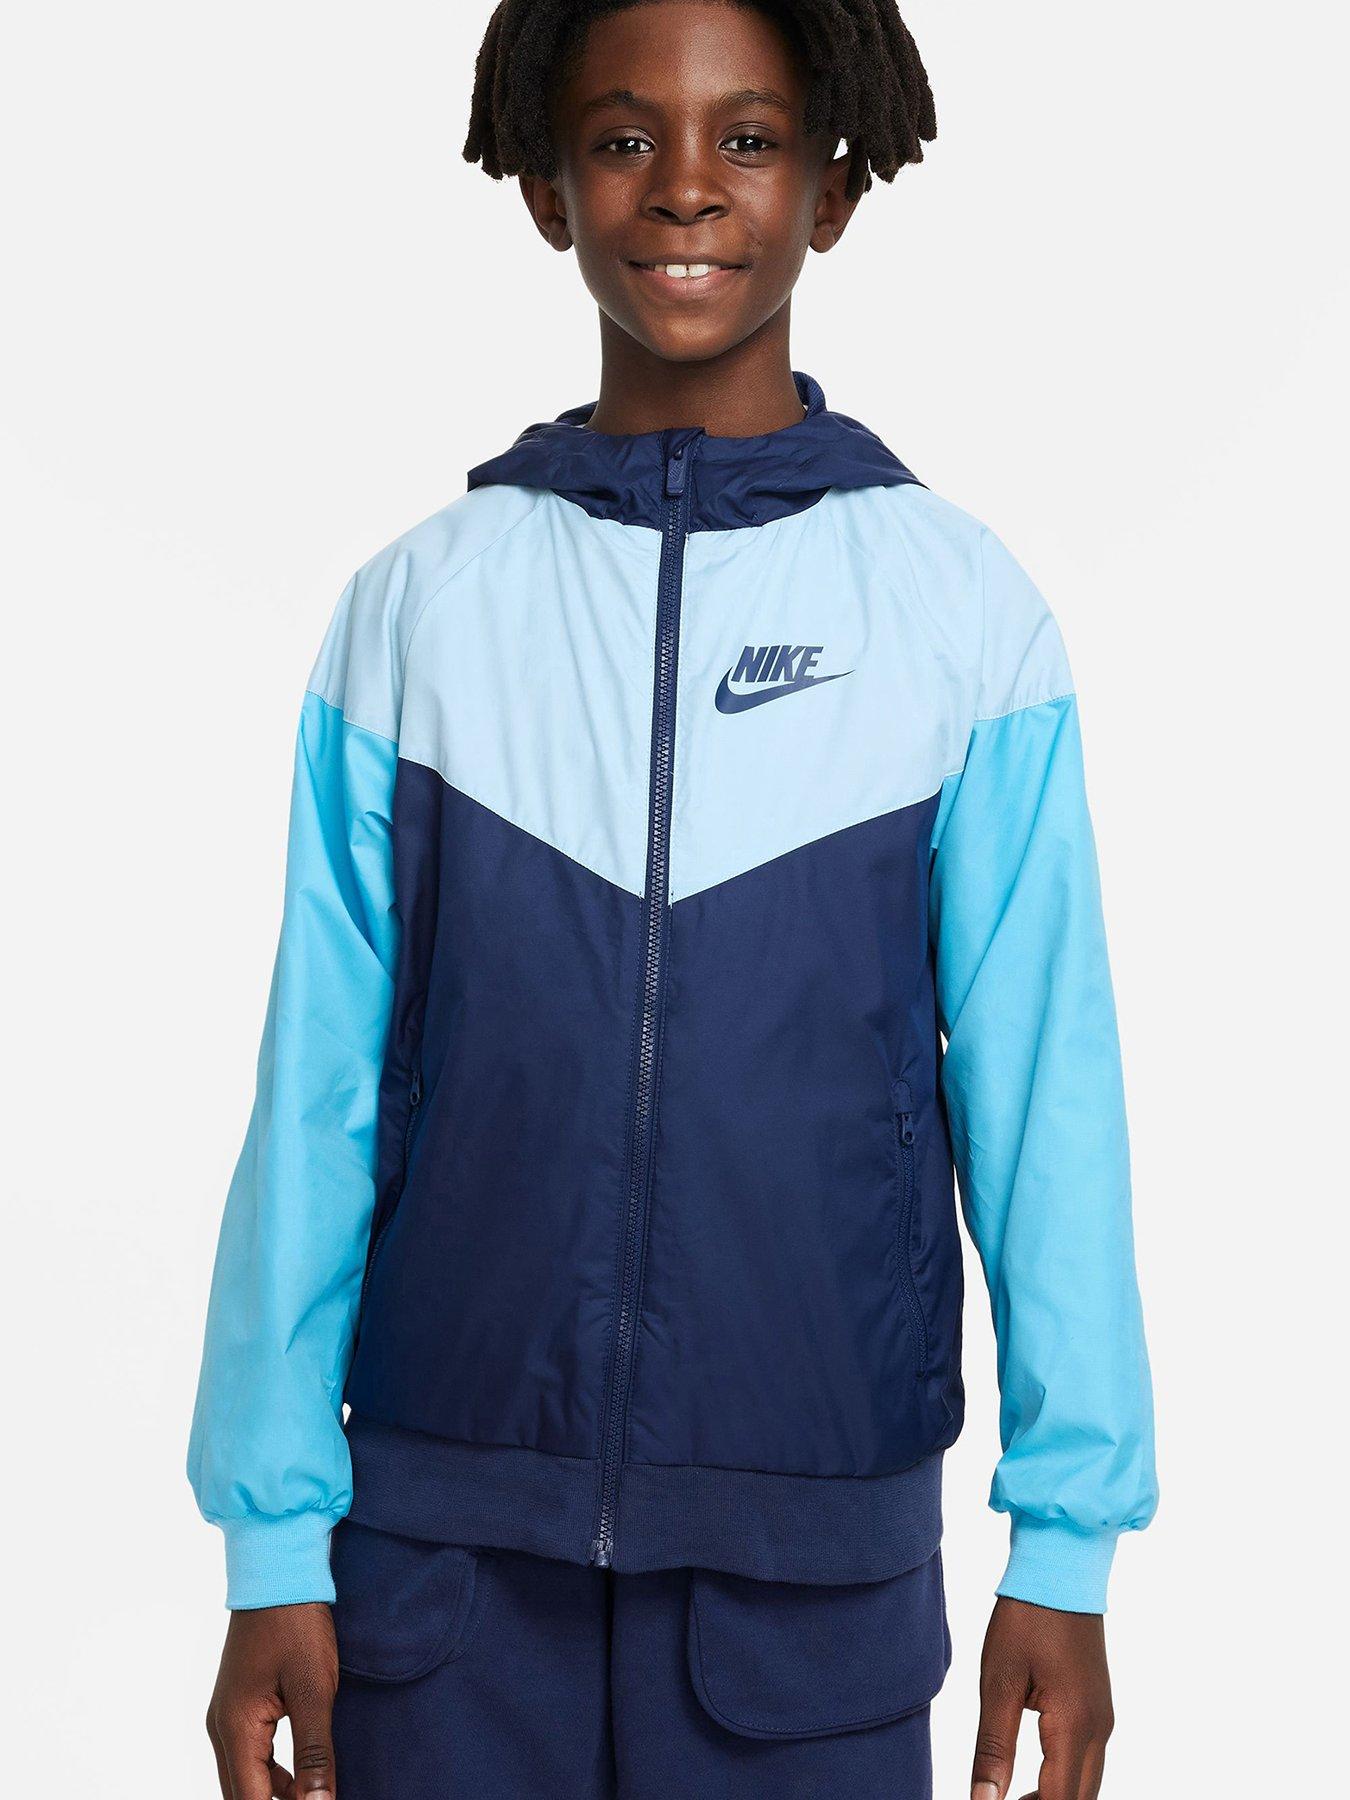 Itaca Espacioso No es suficiente Nike Kids Coats & Jackets | Nike Junior Coat | Very.co.uk